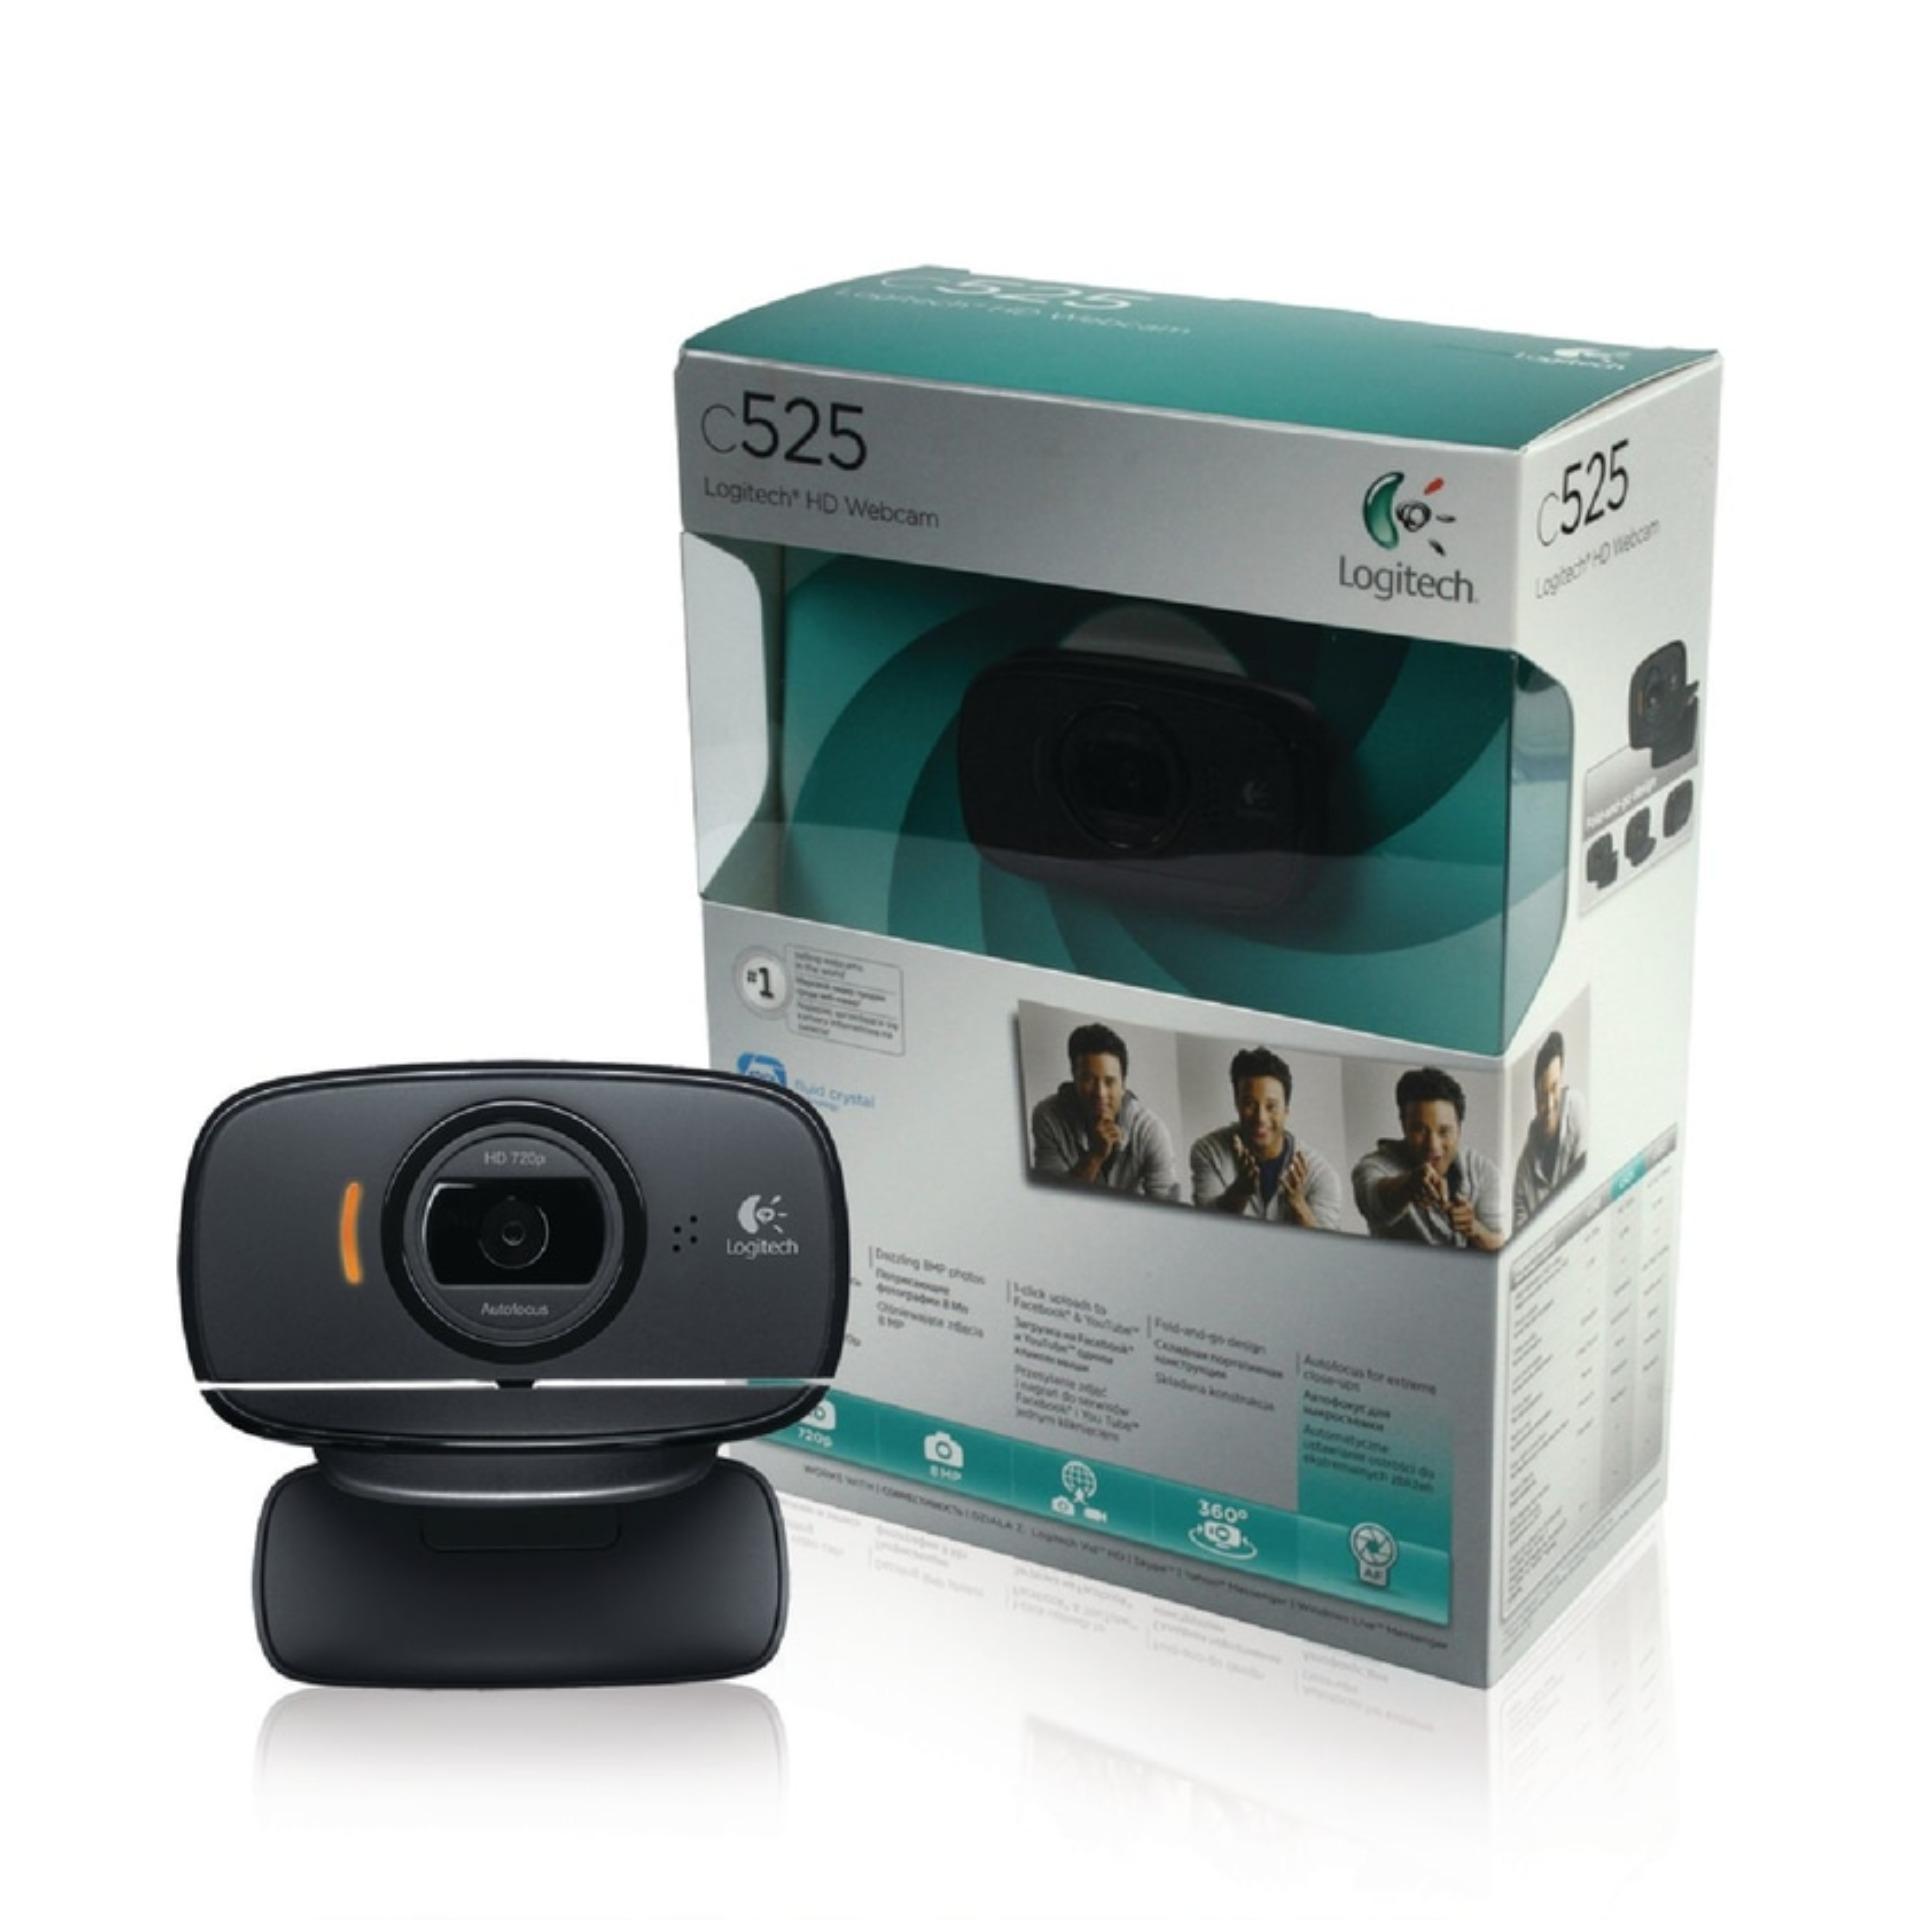 ORIGINAL - Logitech c525 HD Webcam